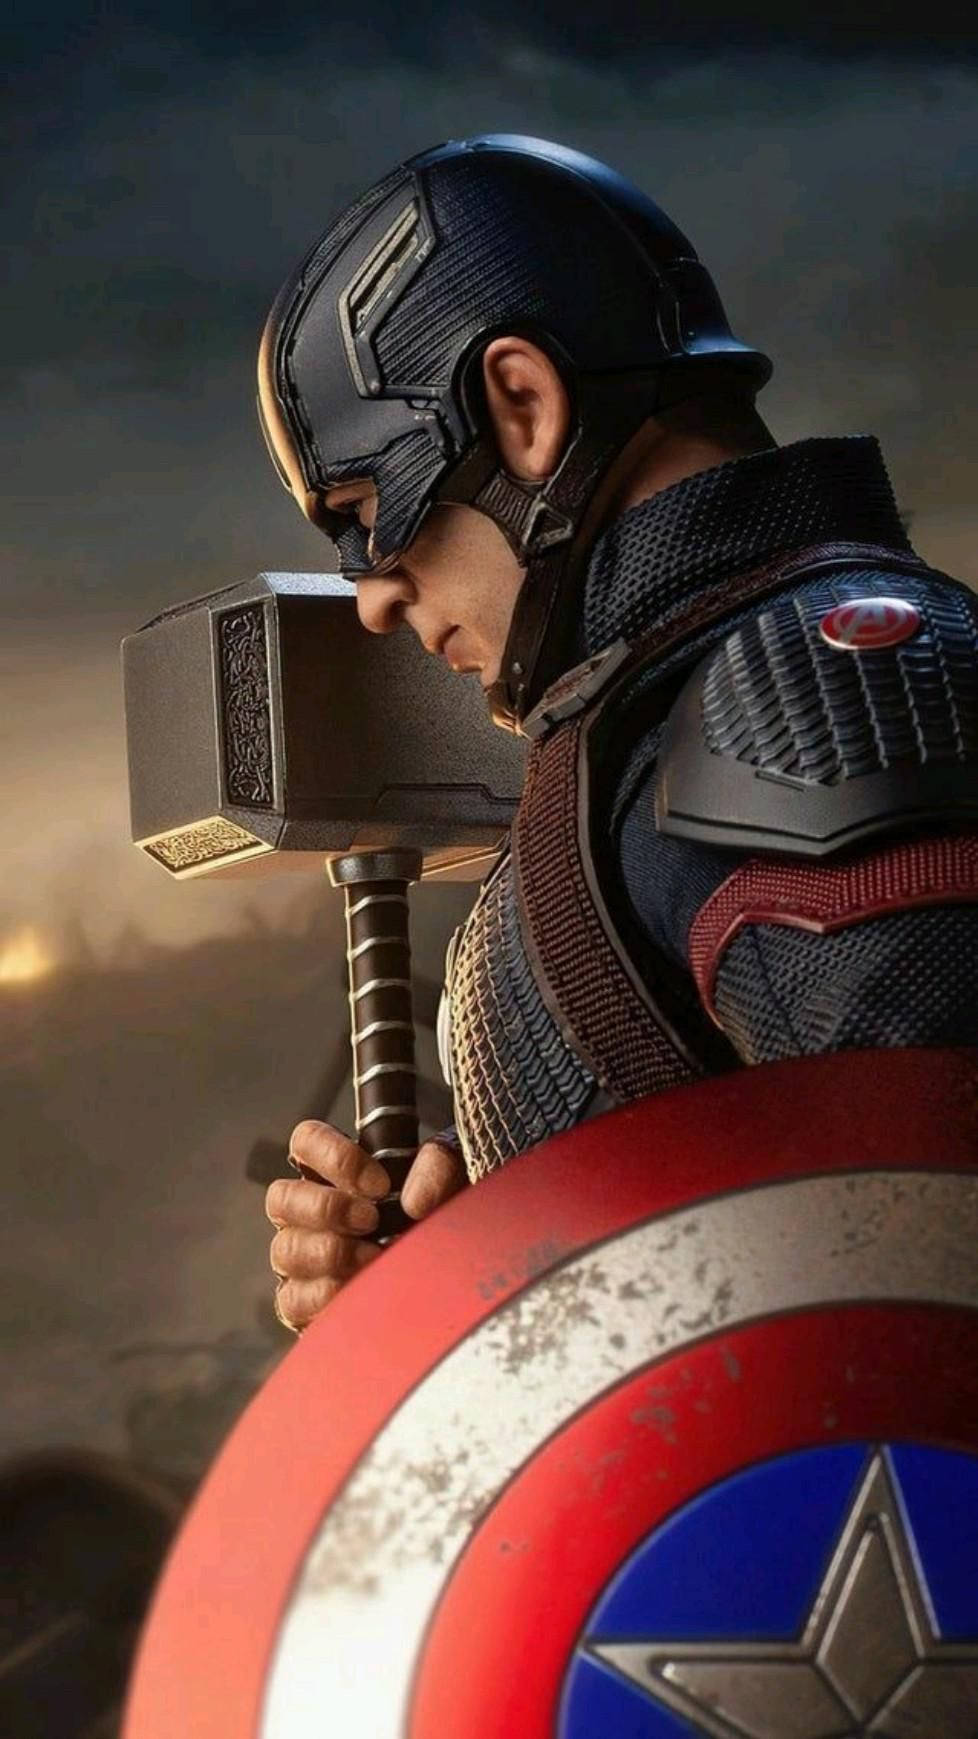 Download Captain America Superhero And Thor Hammer Wallpaper | Wallpapers .com